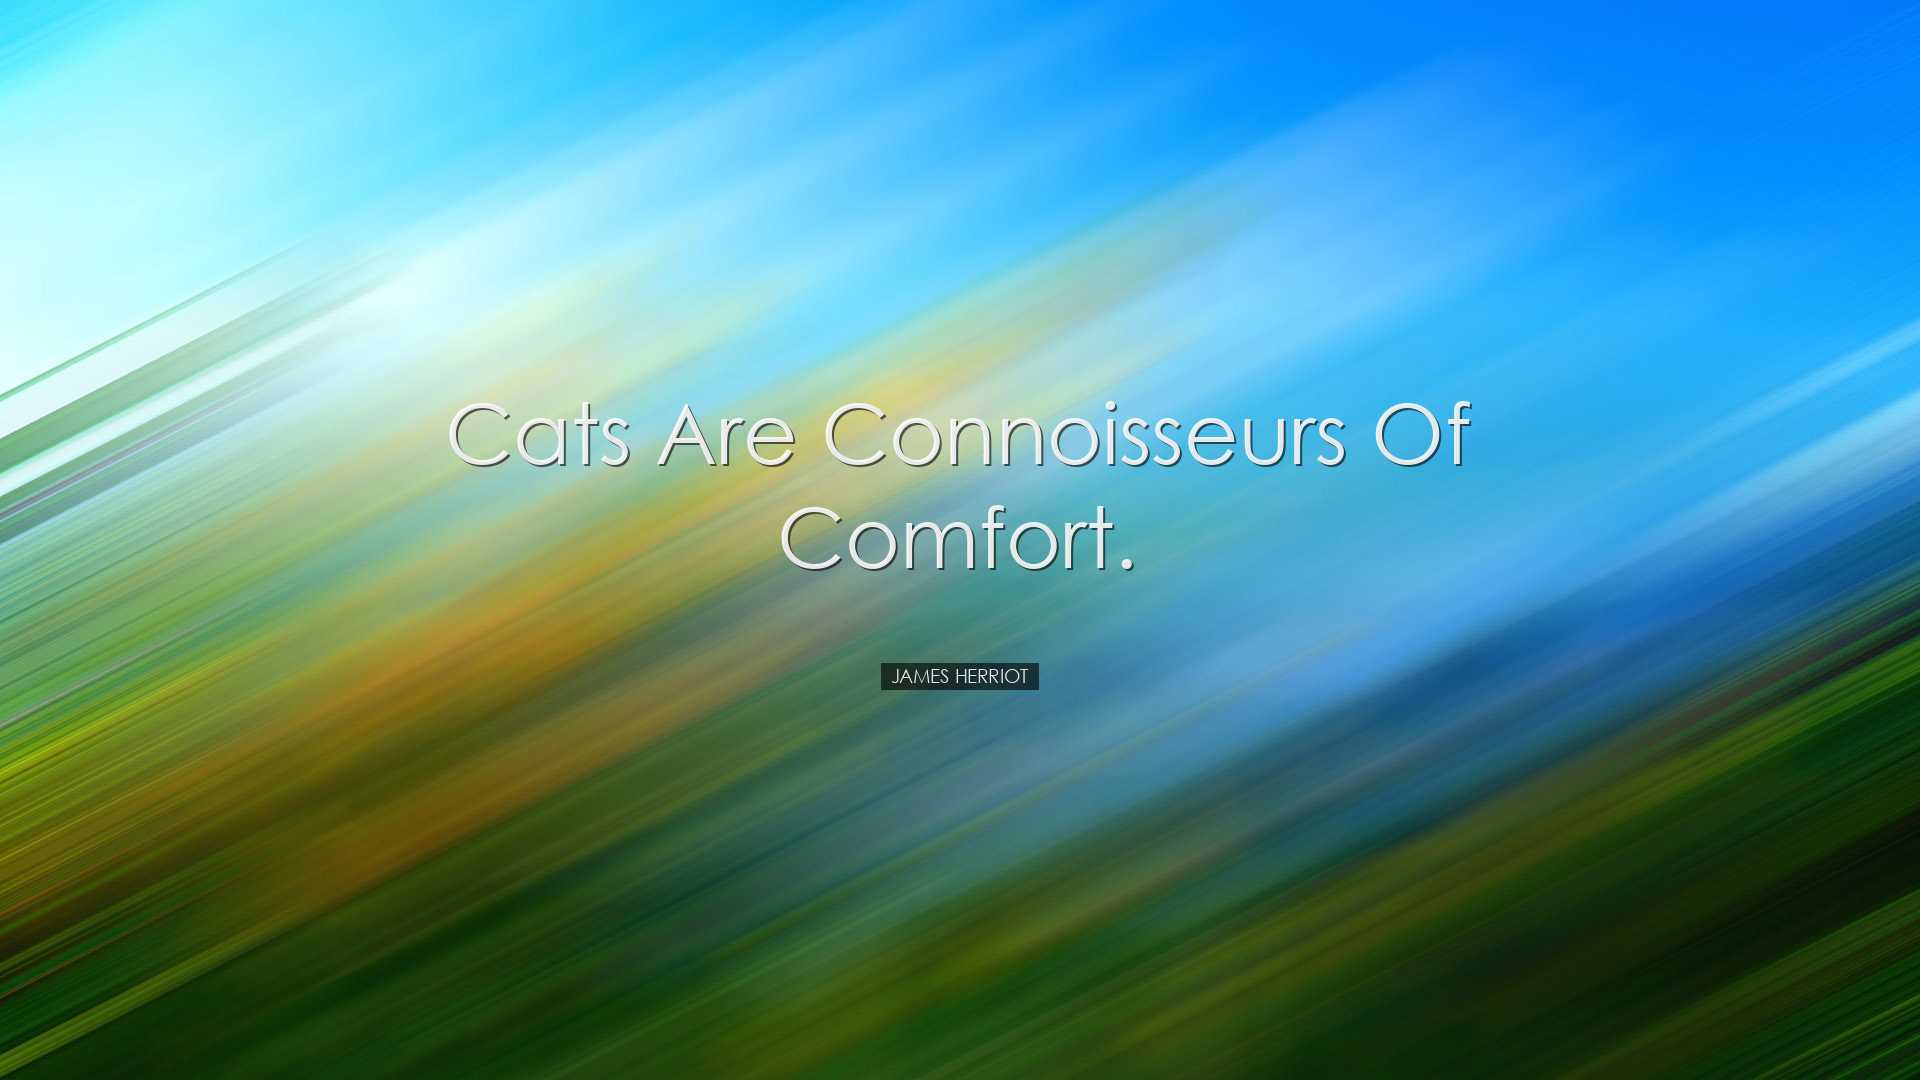 Cats are connoisseurs of comfort. - James Herriot